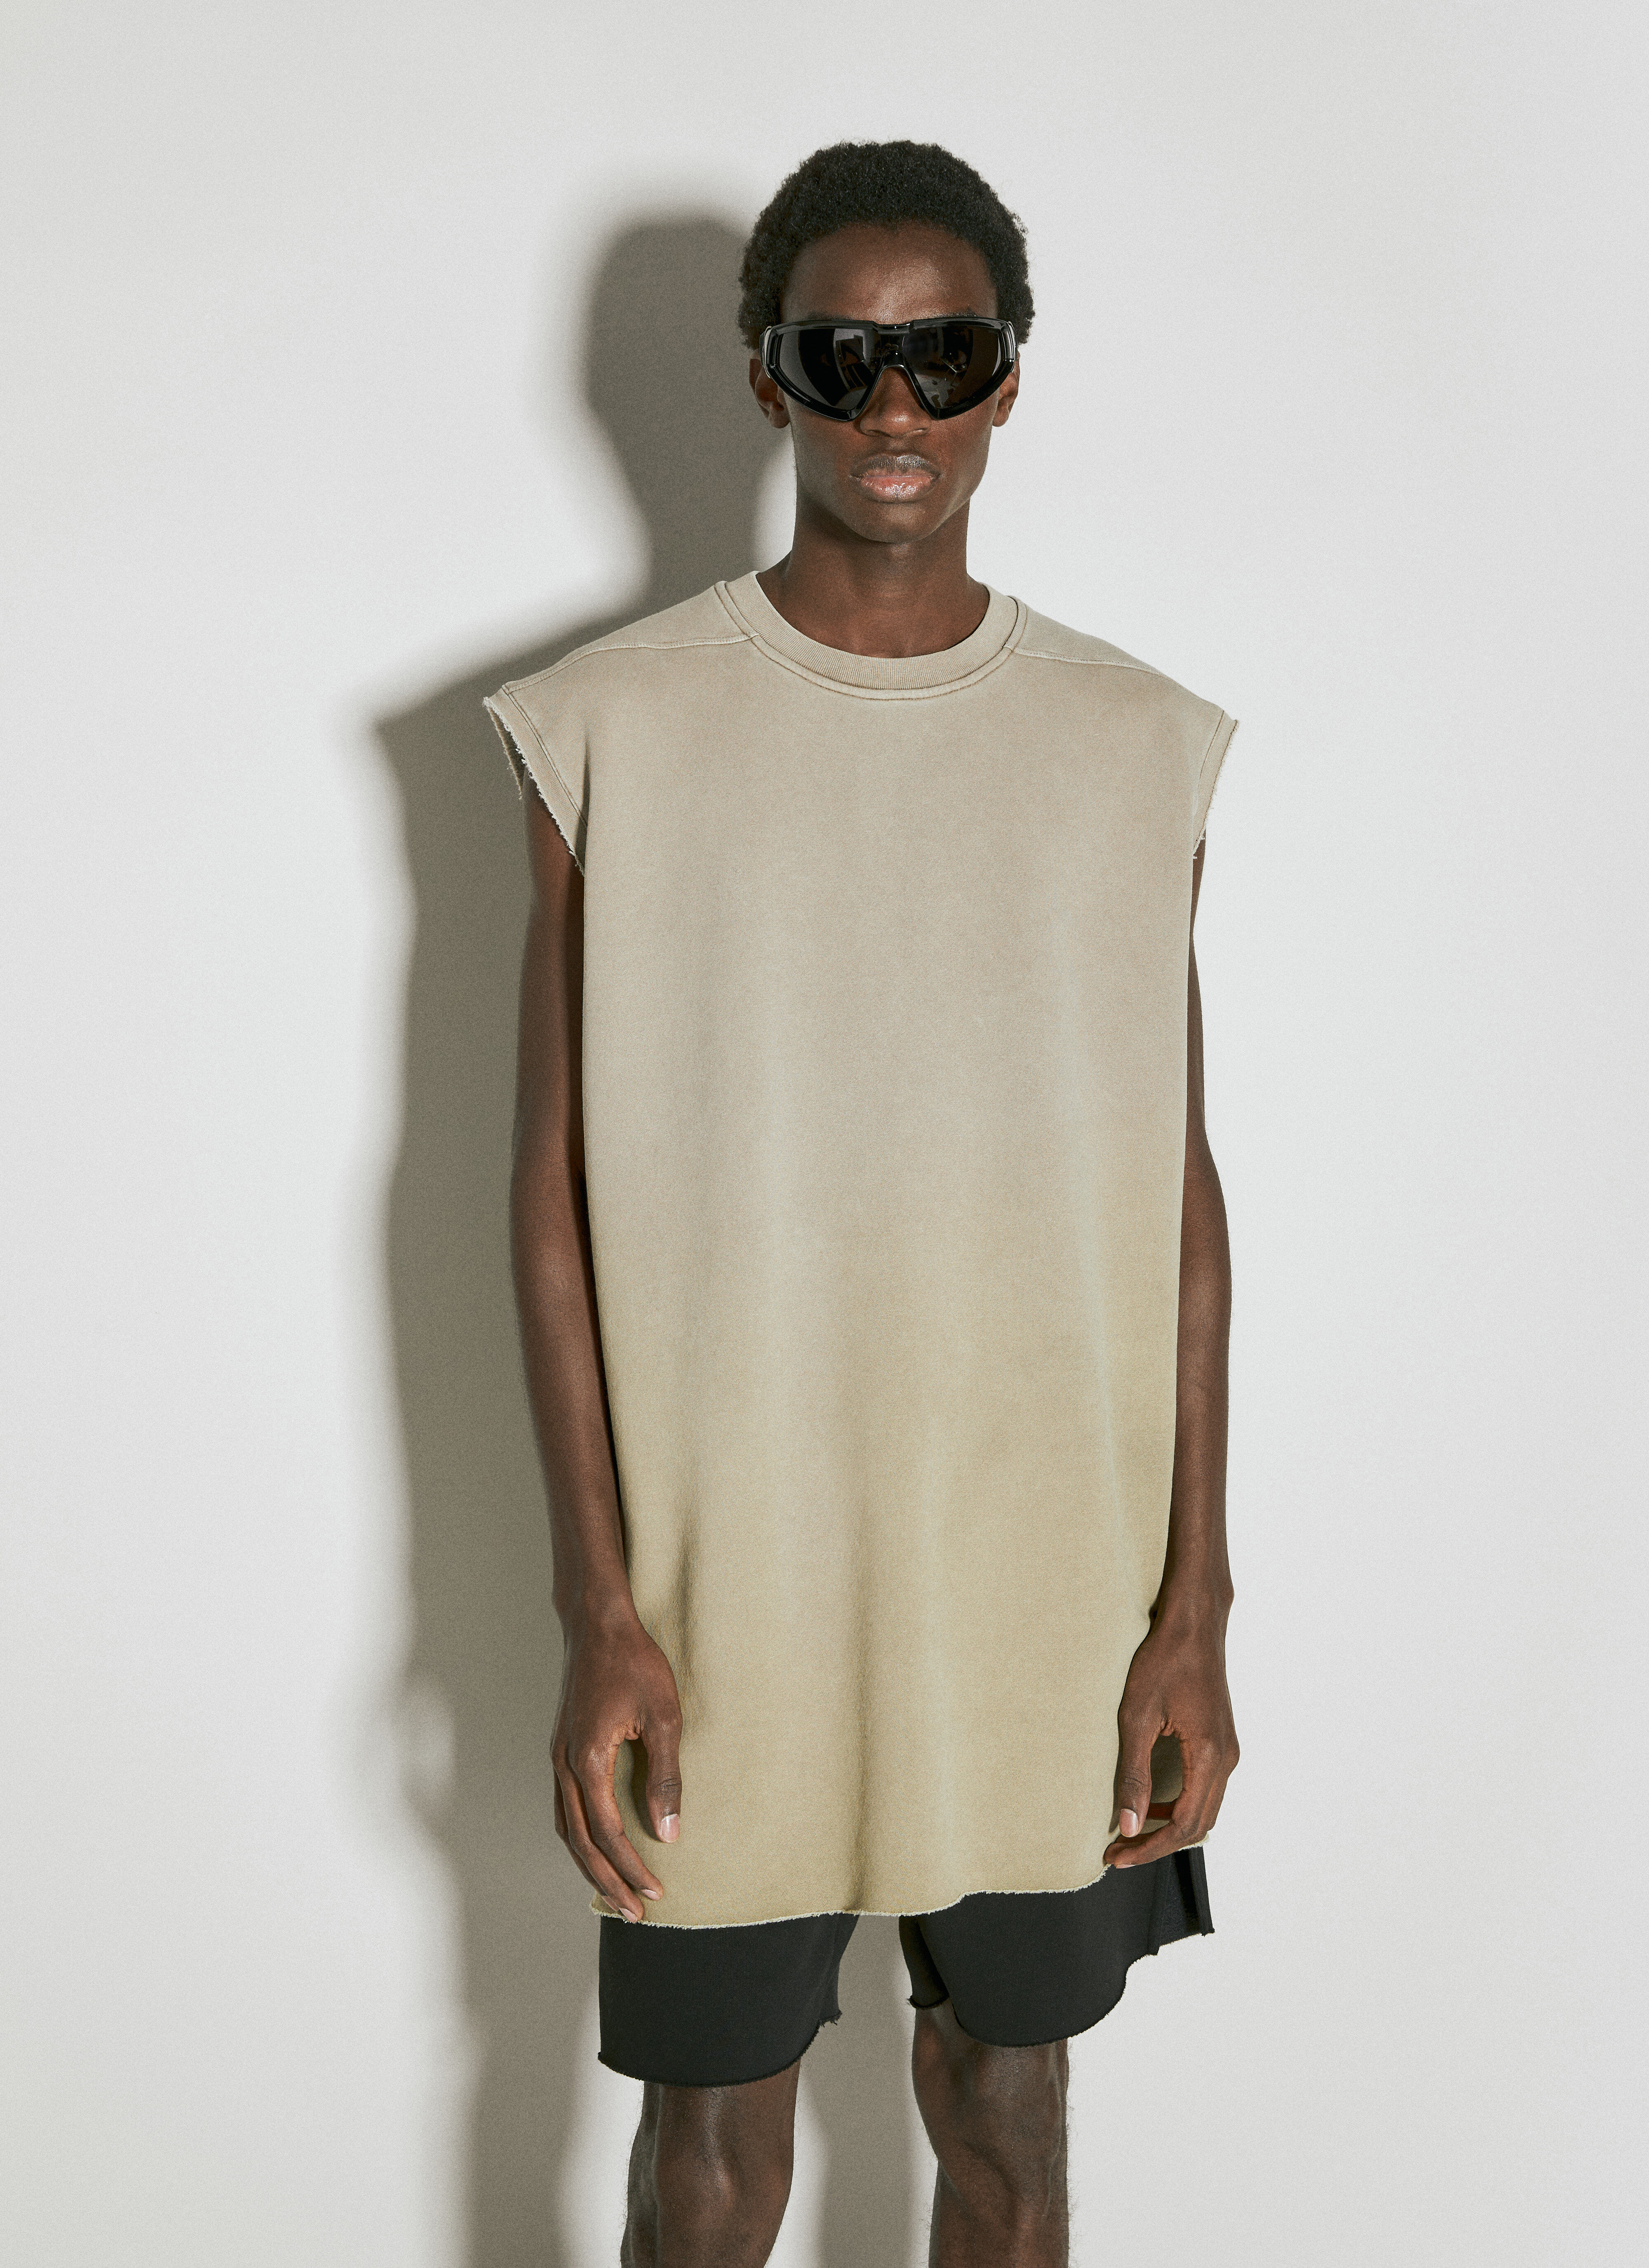 Moncler x Roc Nation designed by Jay-Z Tarp 长款 T 恤 黑色 mrn0156002